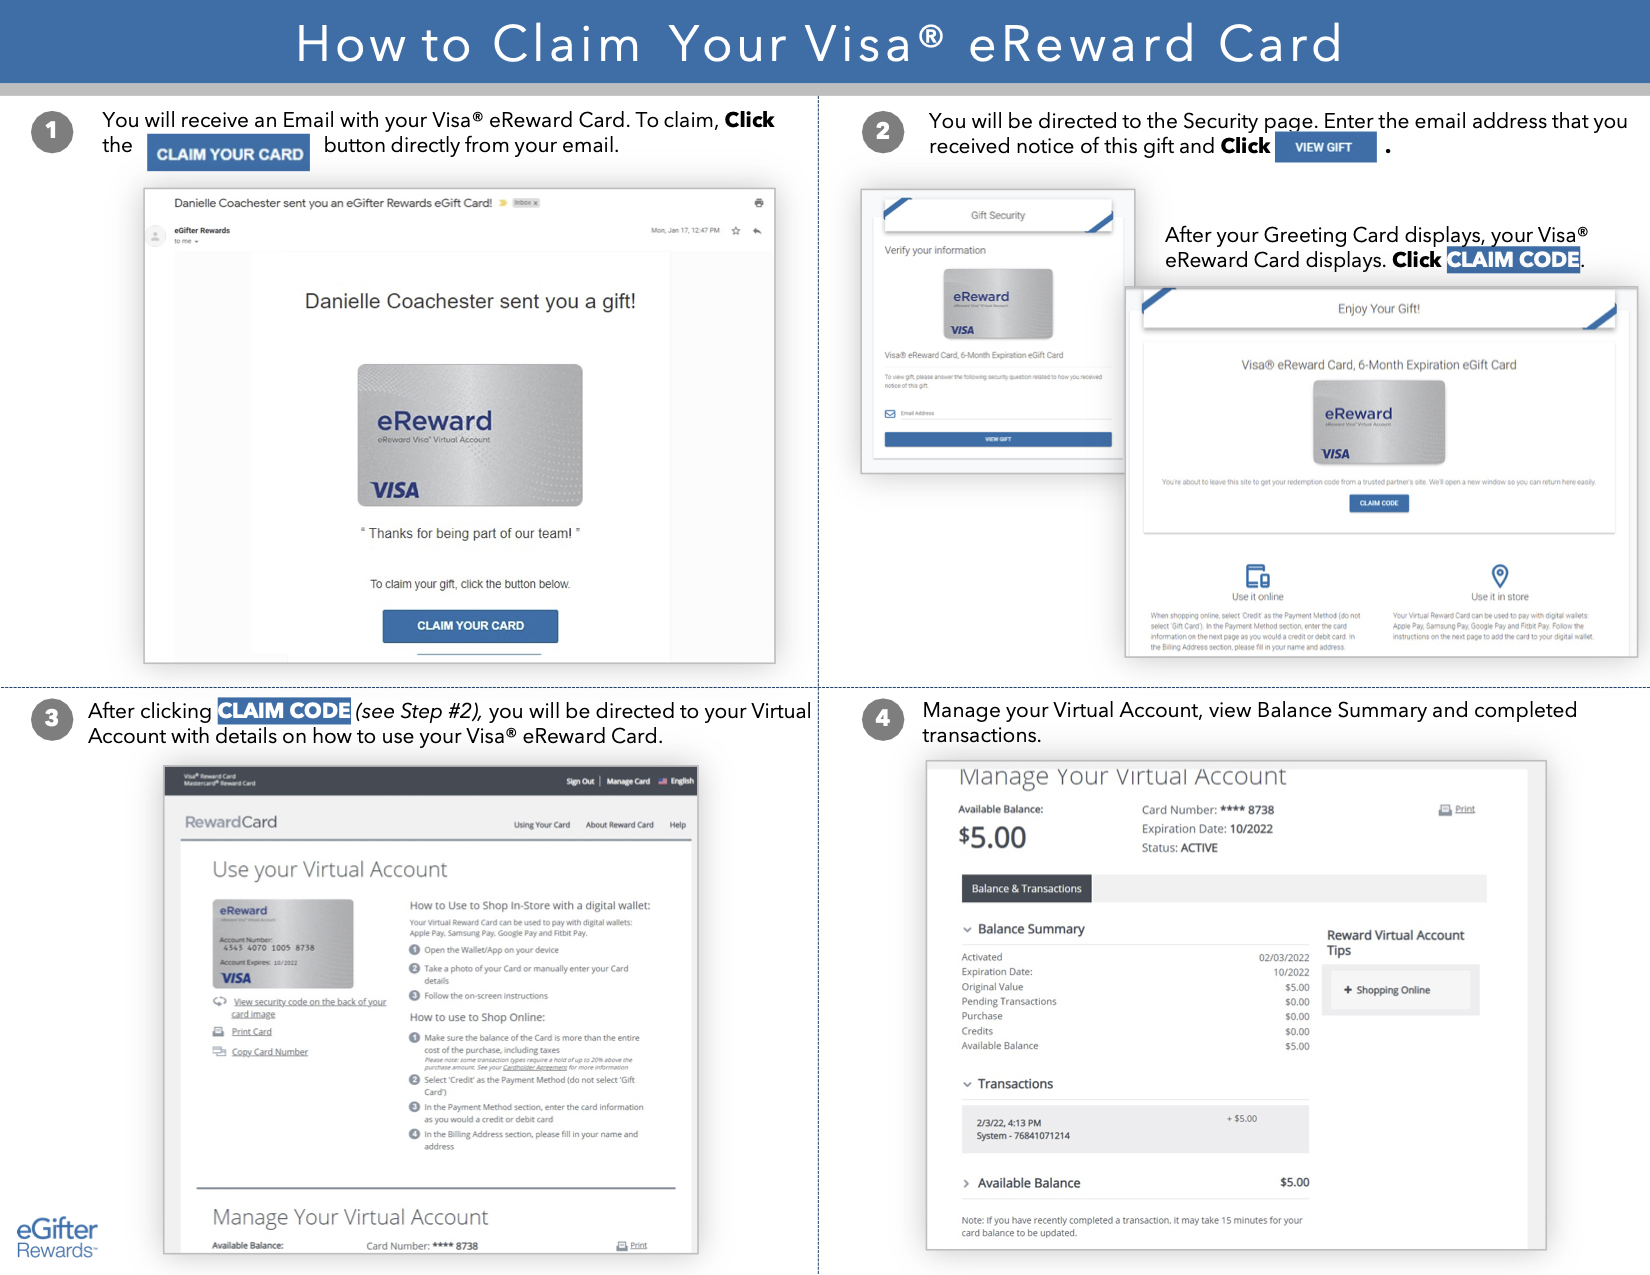 Redeem_Your_Visa__eReward_Card.jpg